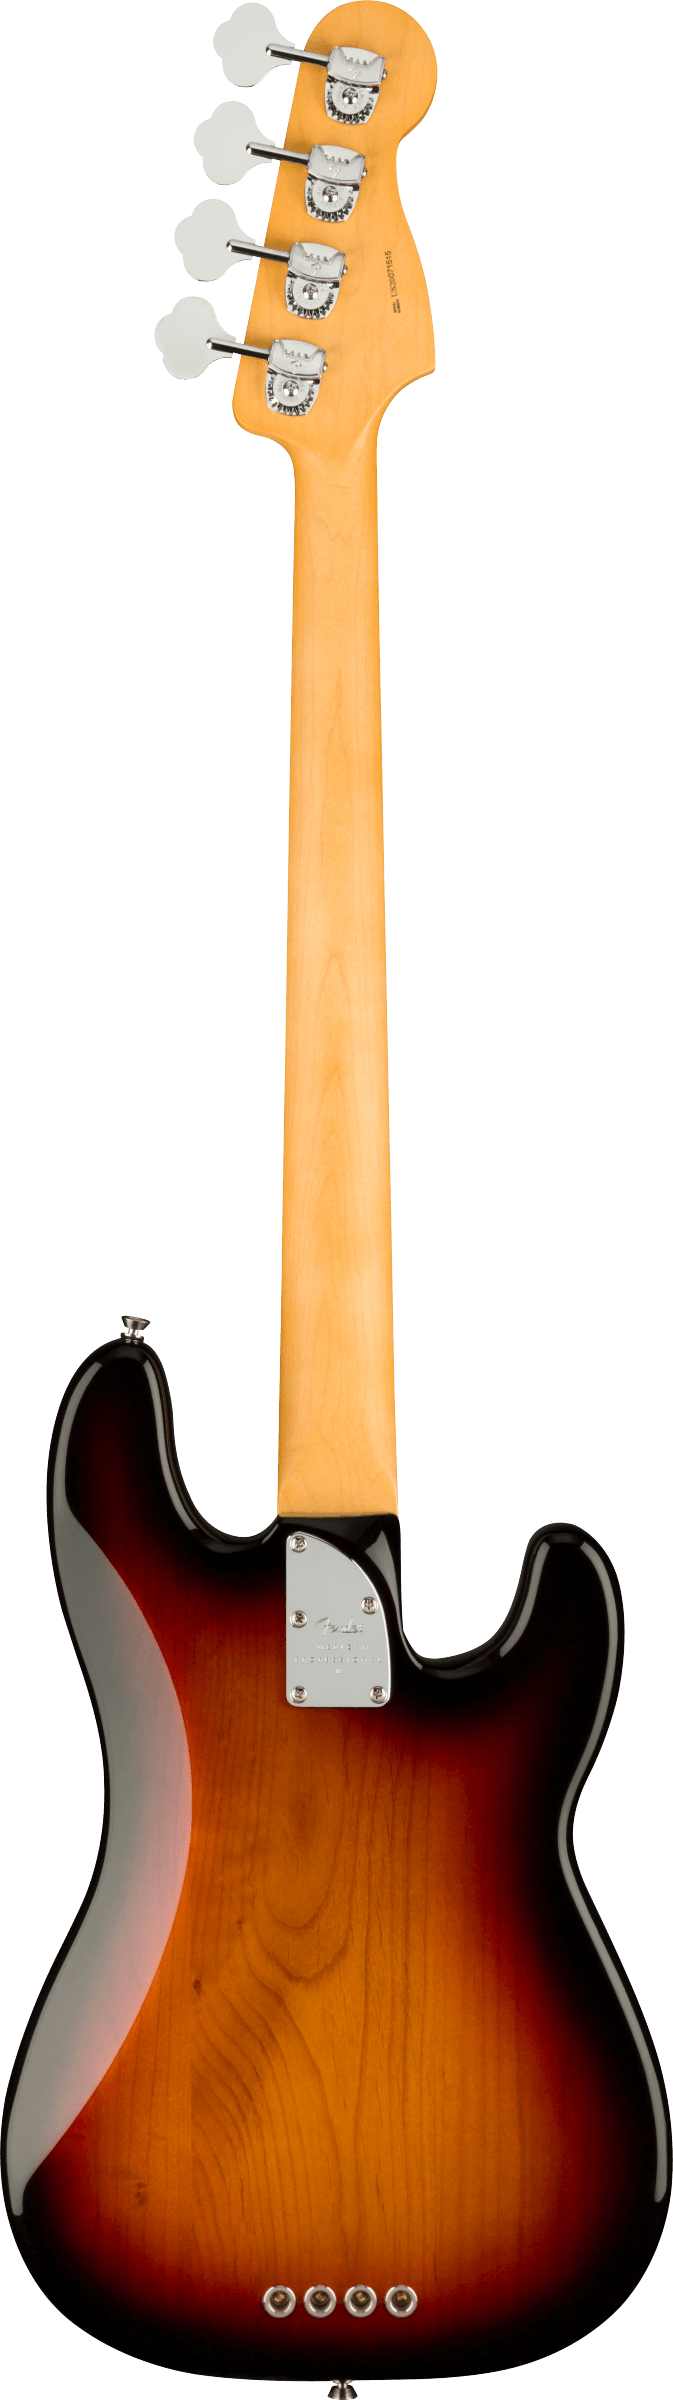 Fender American Professional II Precision Bass Left-Hand, Rosewood Fingerboard, 3-Color Sunburst